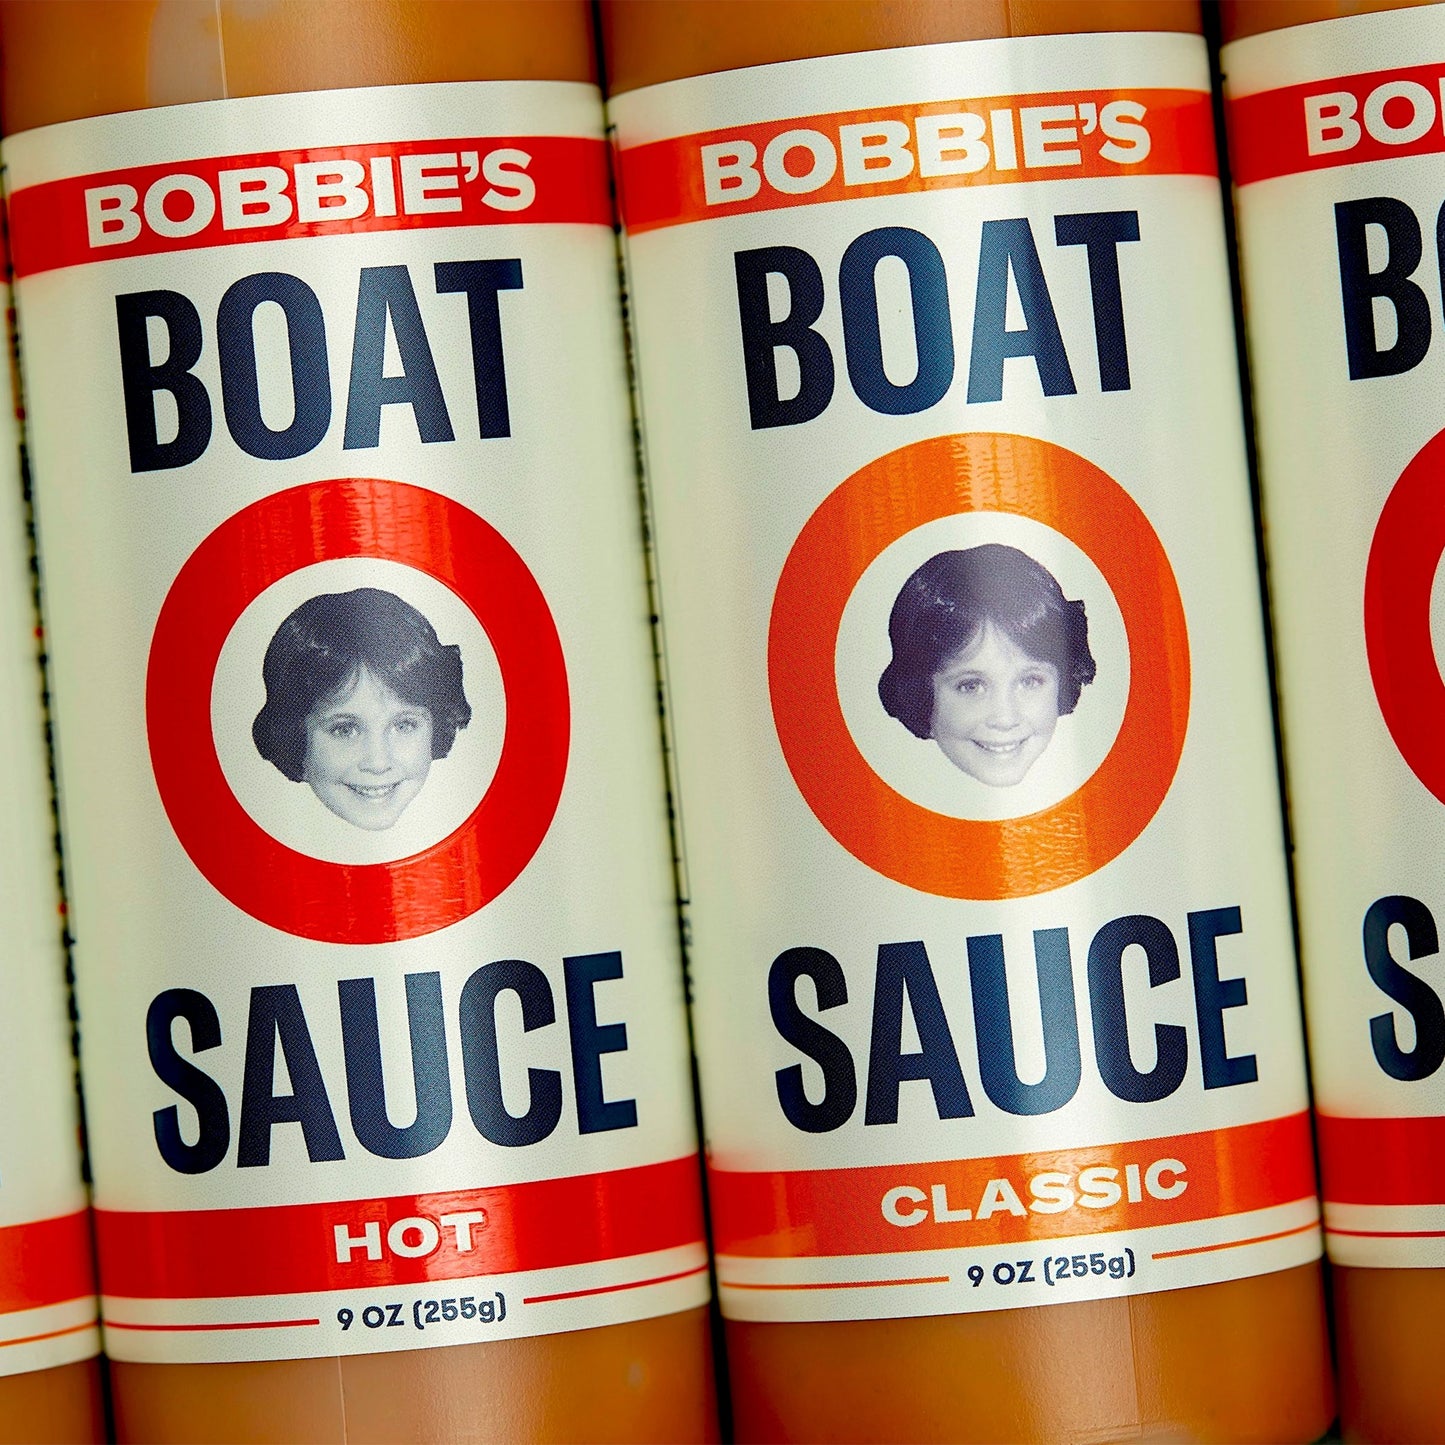 Bobbie's Boat Sauce Gift Pack